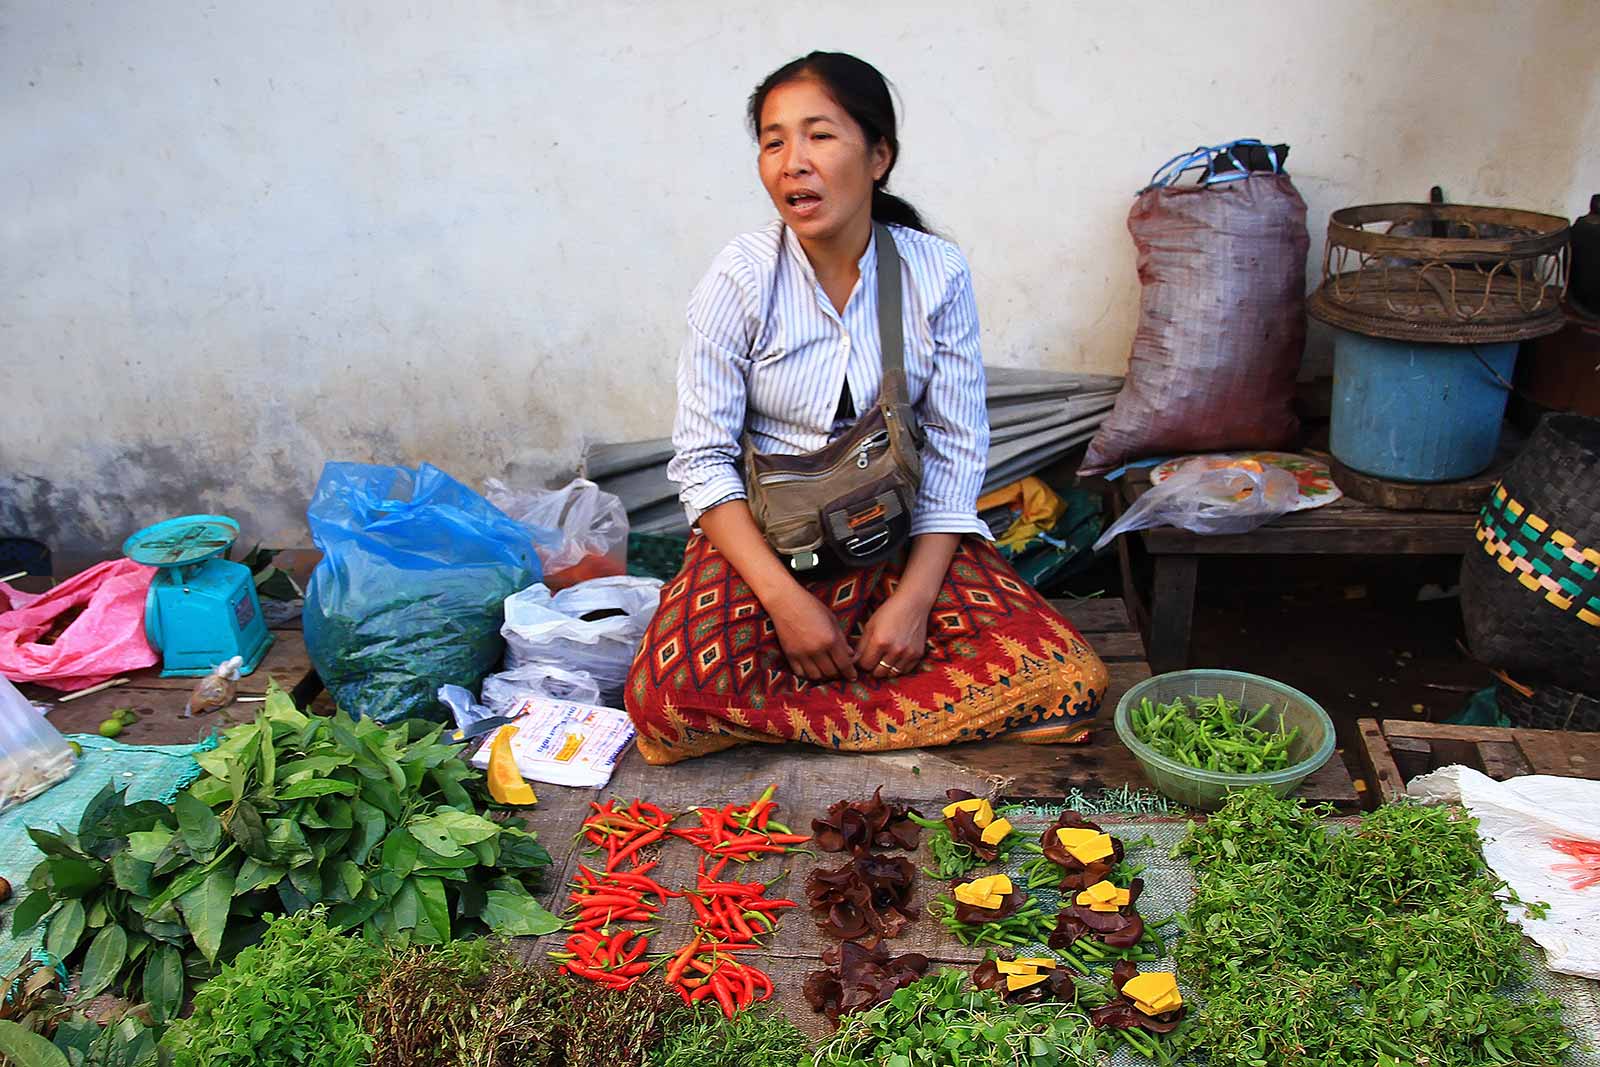 Market woman in Laos selling vegetable.